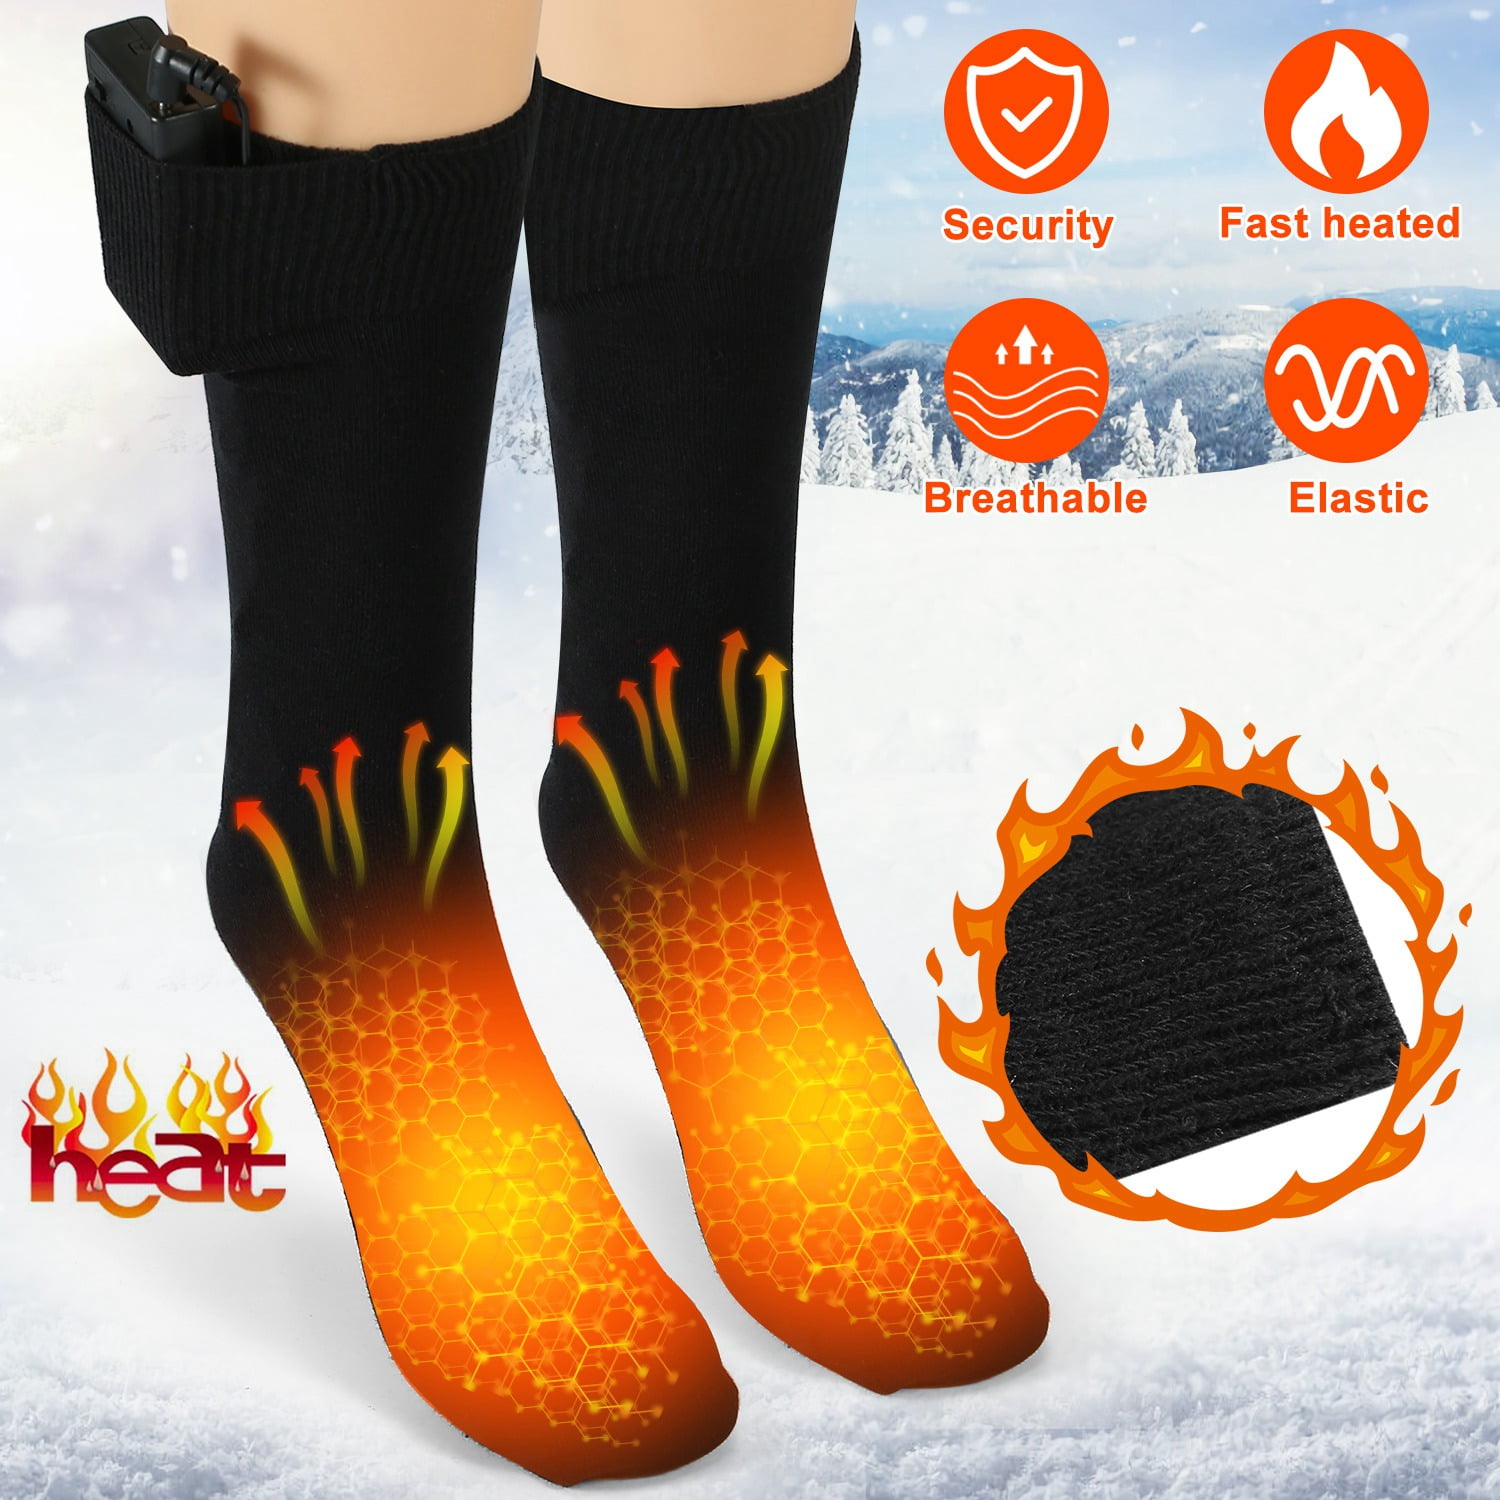 Electric Heated Socks Rechargeable Battery Feet Foot Winter Warmer Thermal Socks 